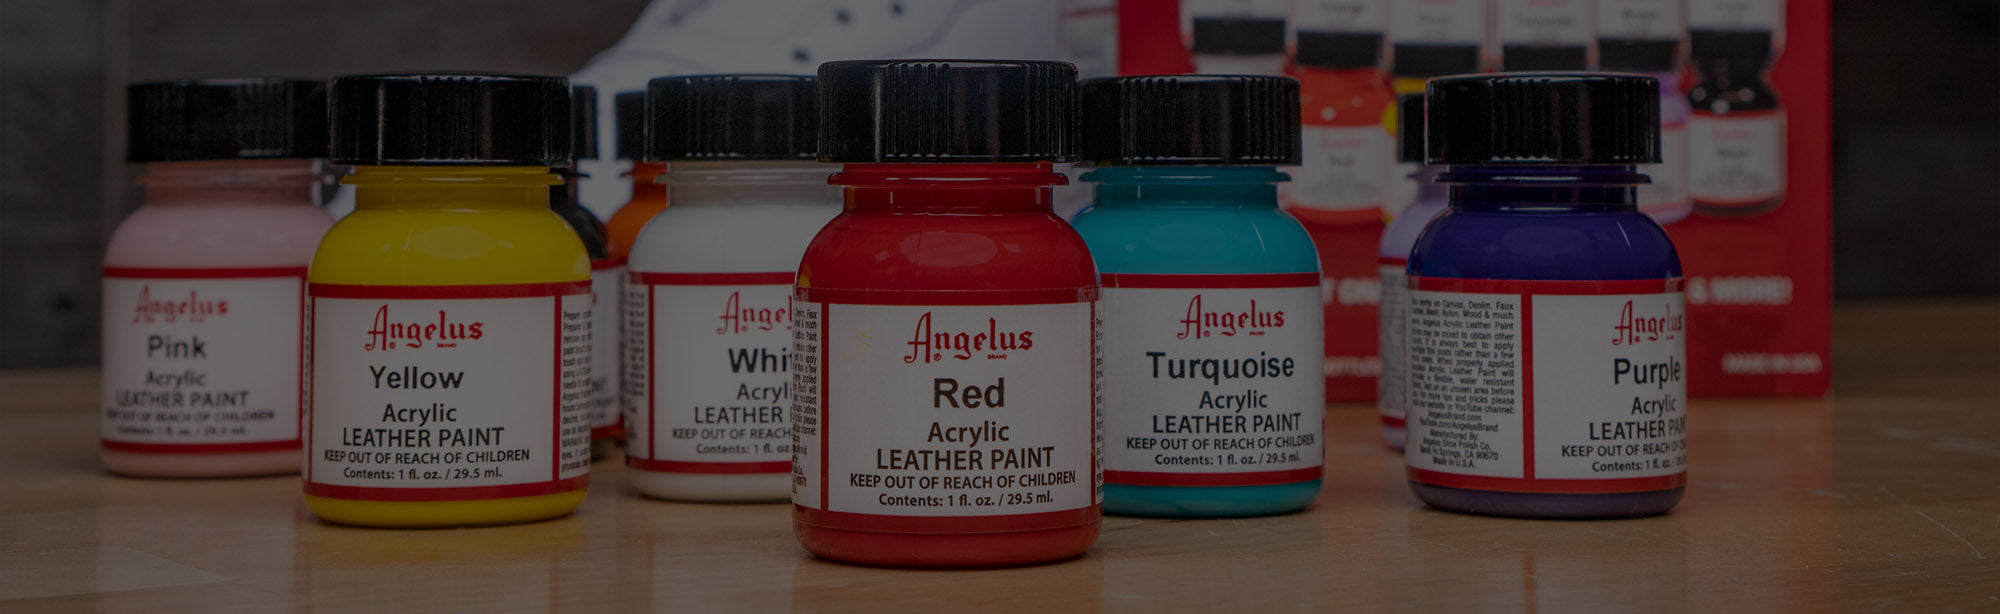 Leather Treatments & Paints Repair Kits for sale